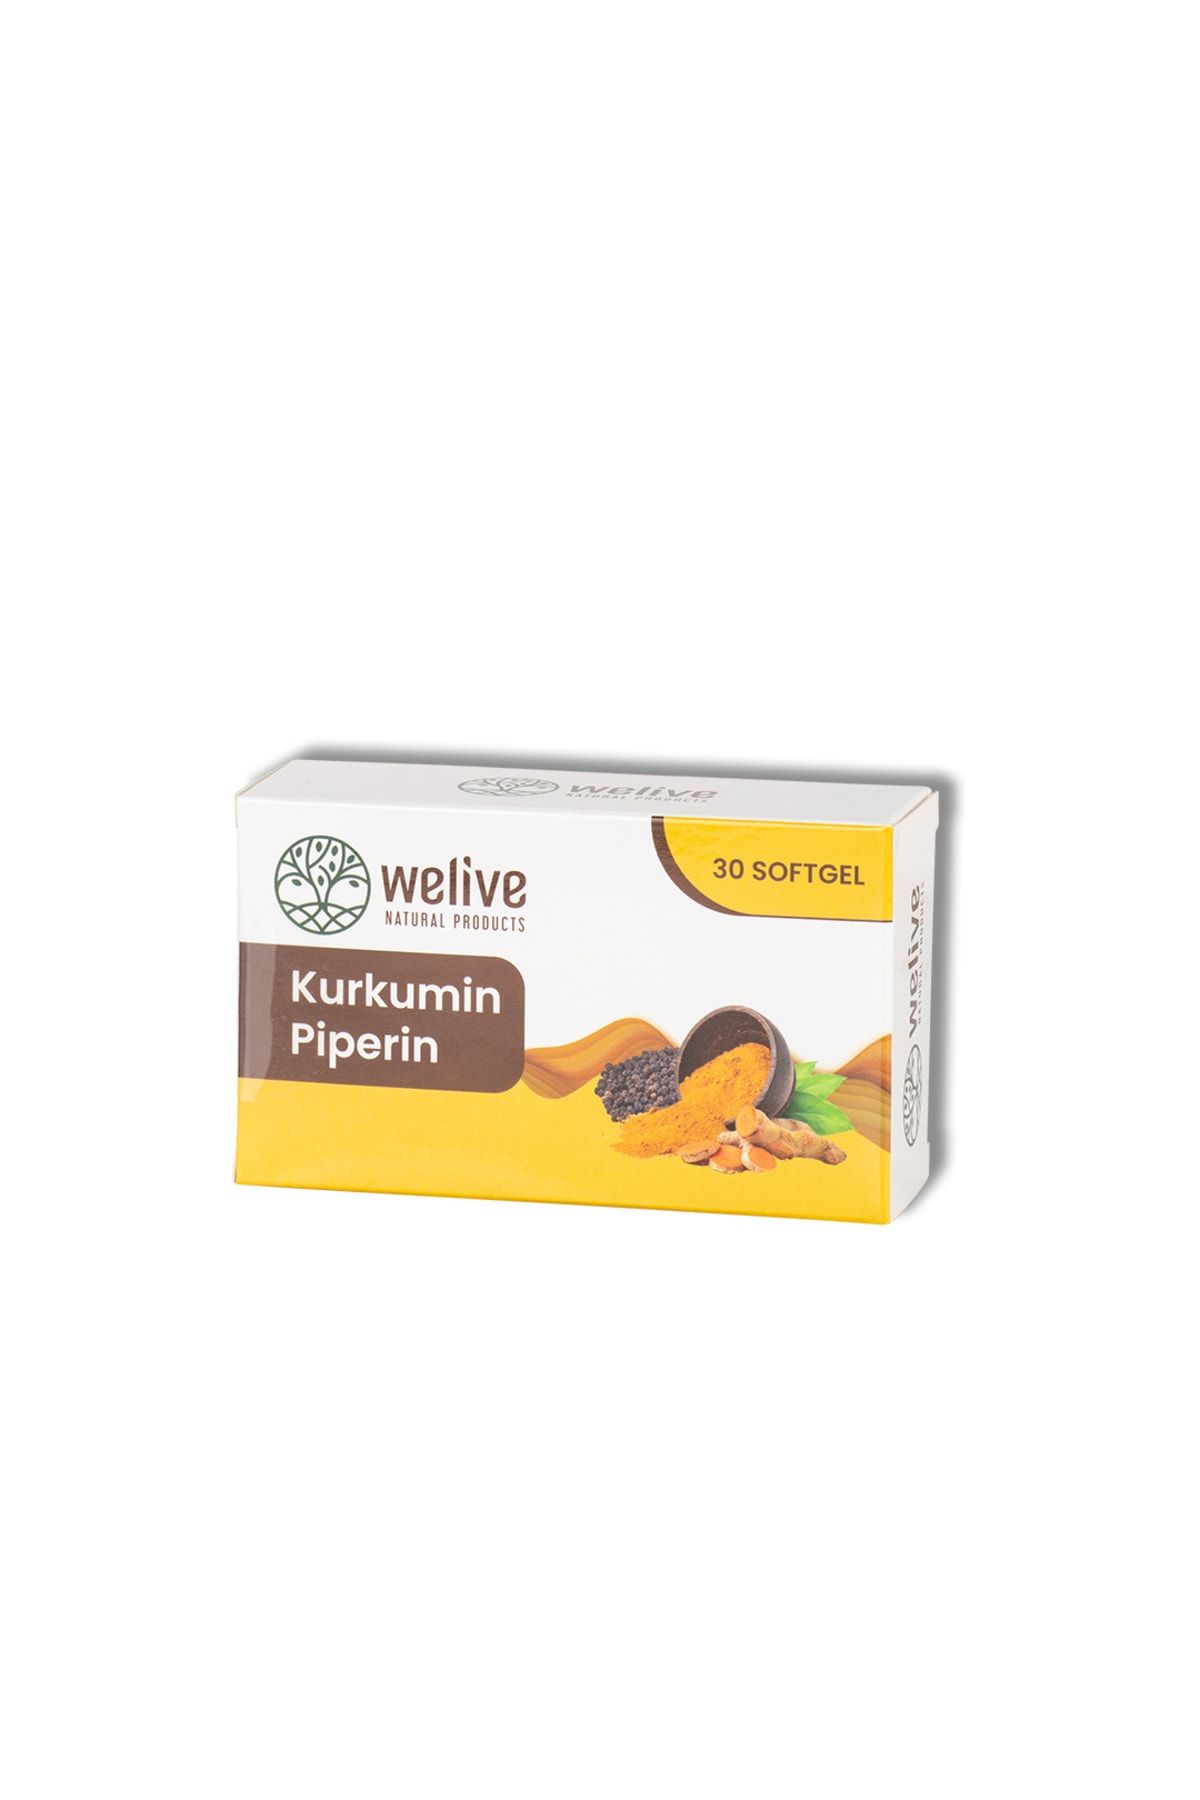 Welive Kurkumin ( Curcumın) Piperin / 30 Softgel